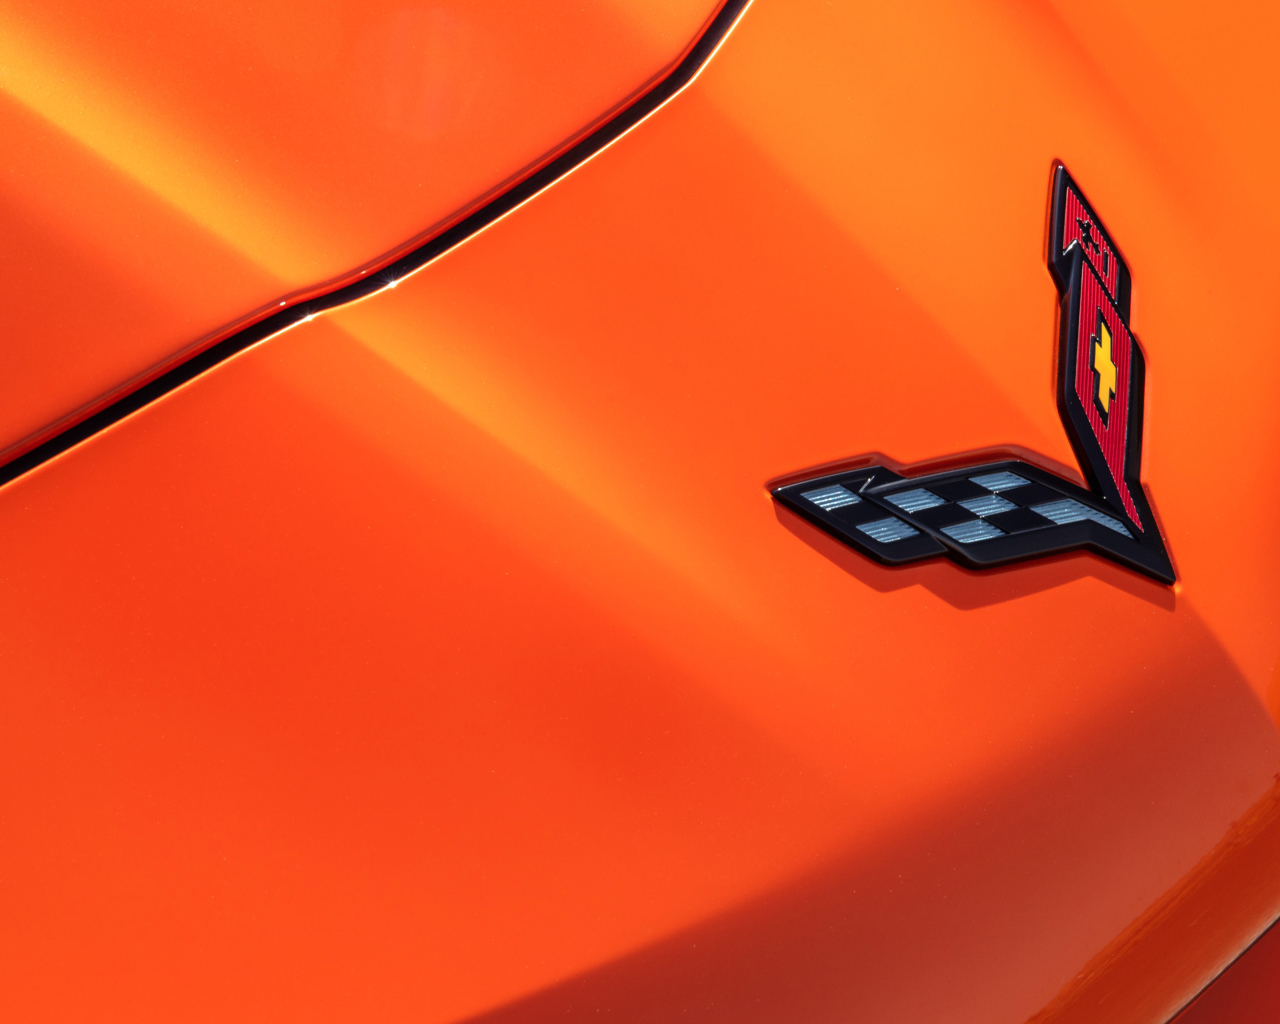 Логотип автомобиля Chevrolet Corvette, 2019